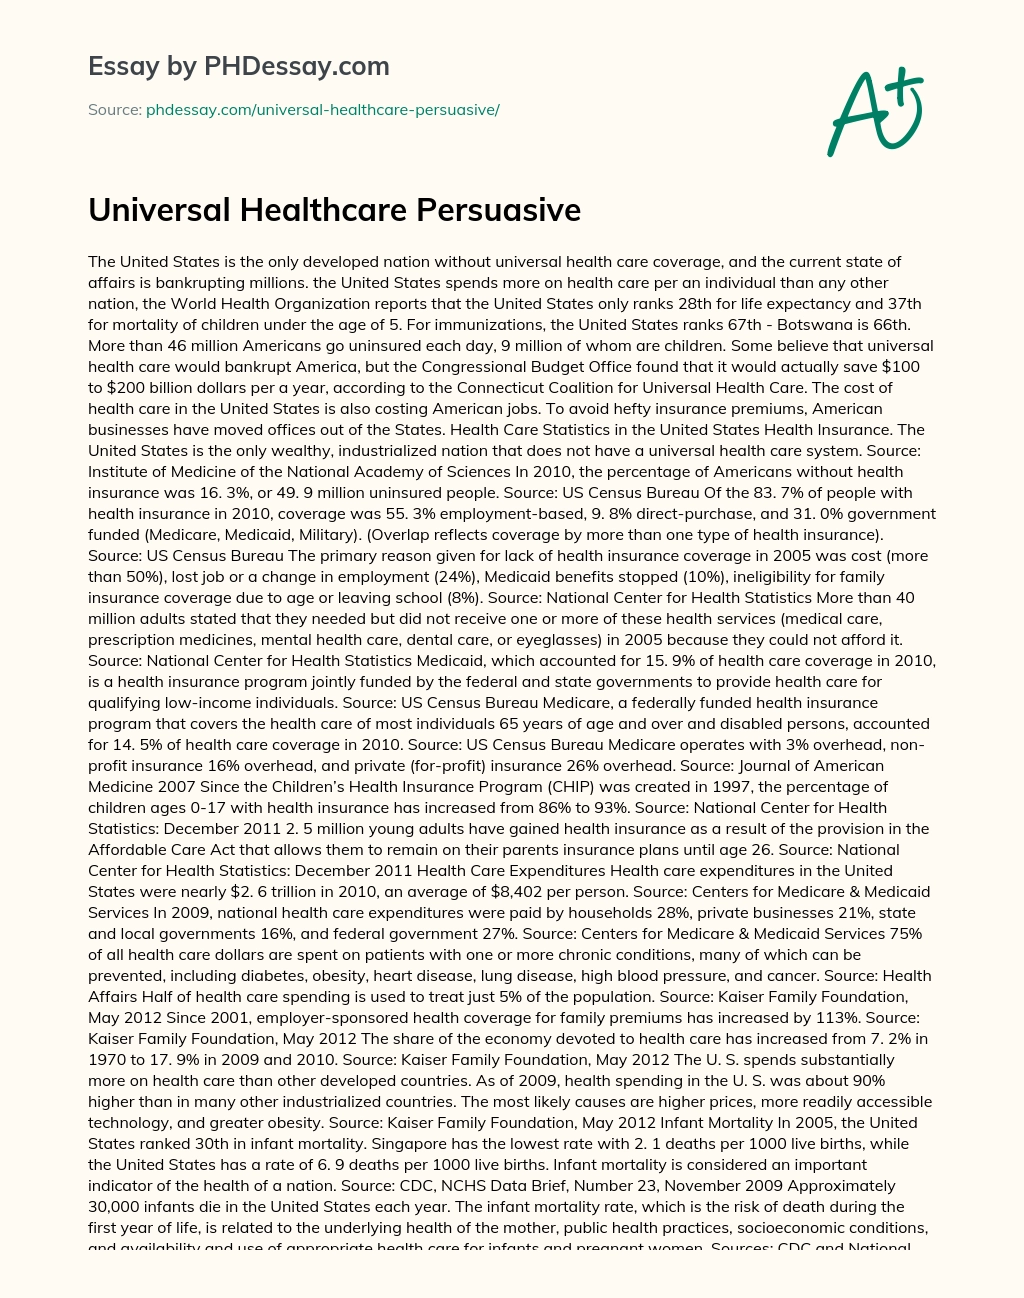 Universal Healthcare Persuasive essay